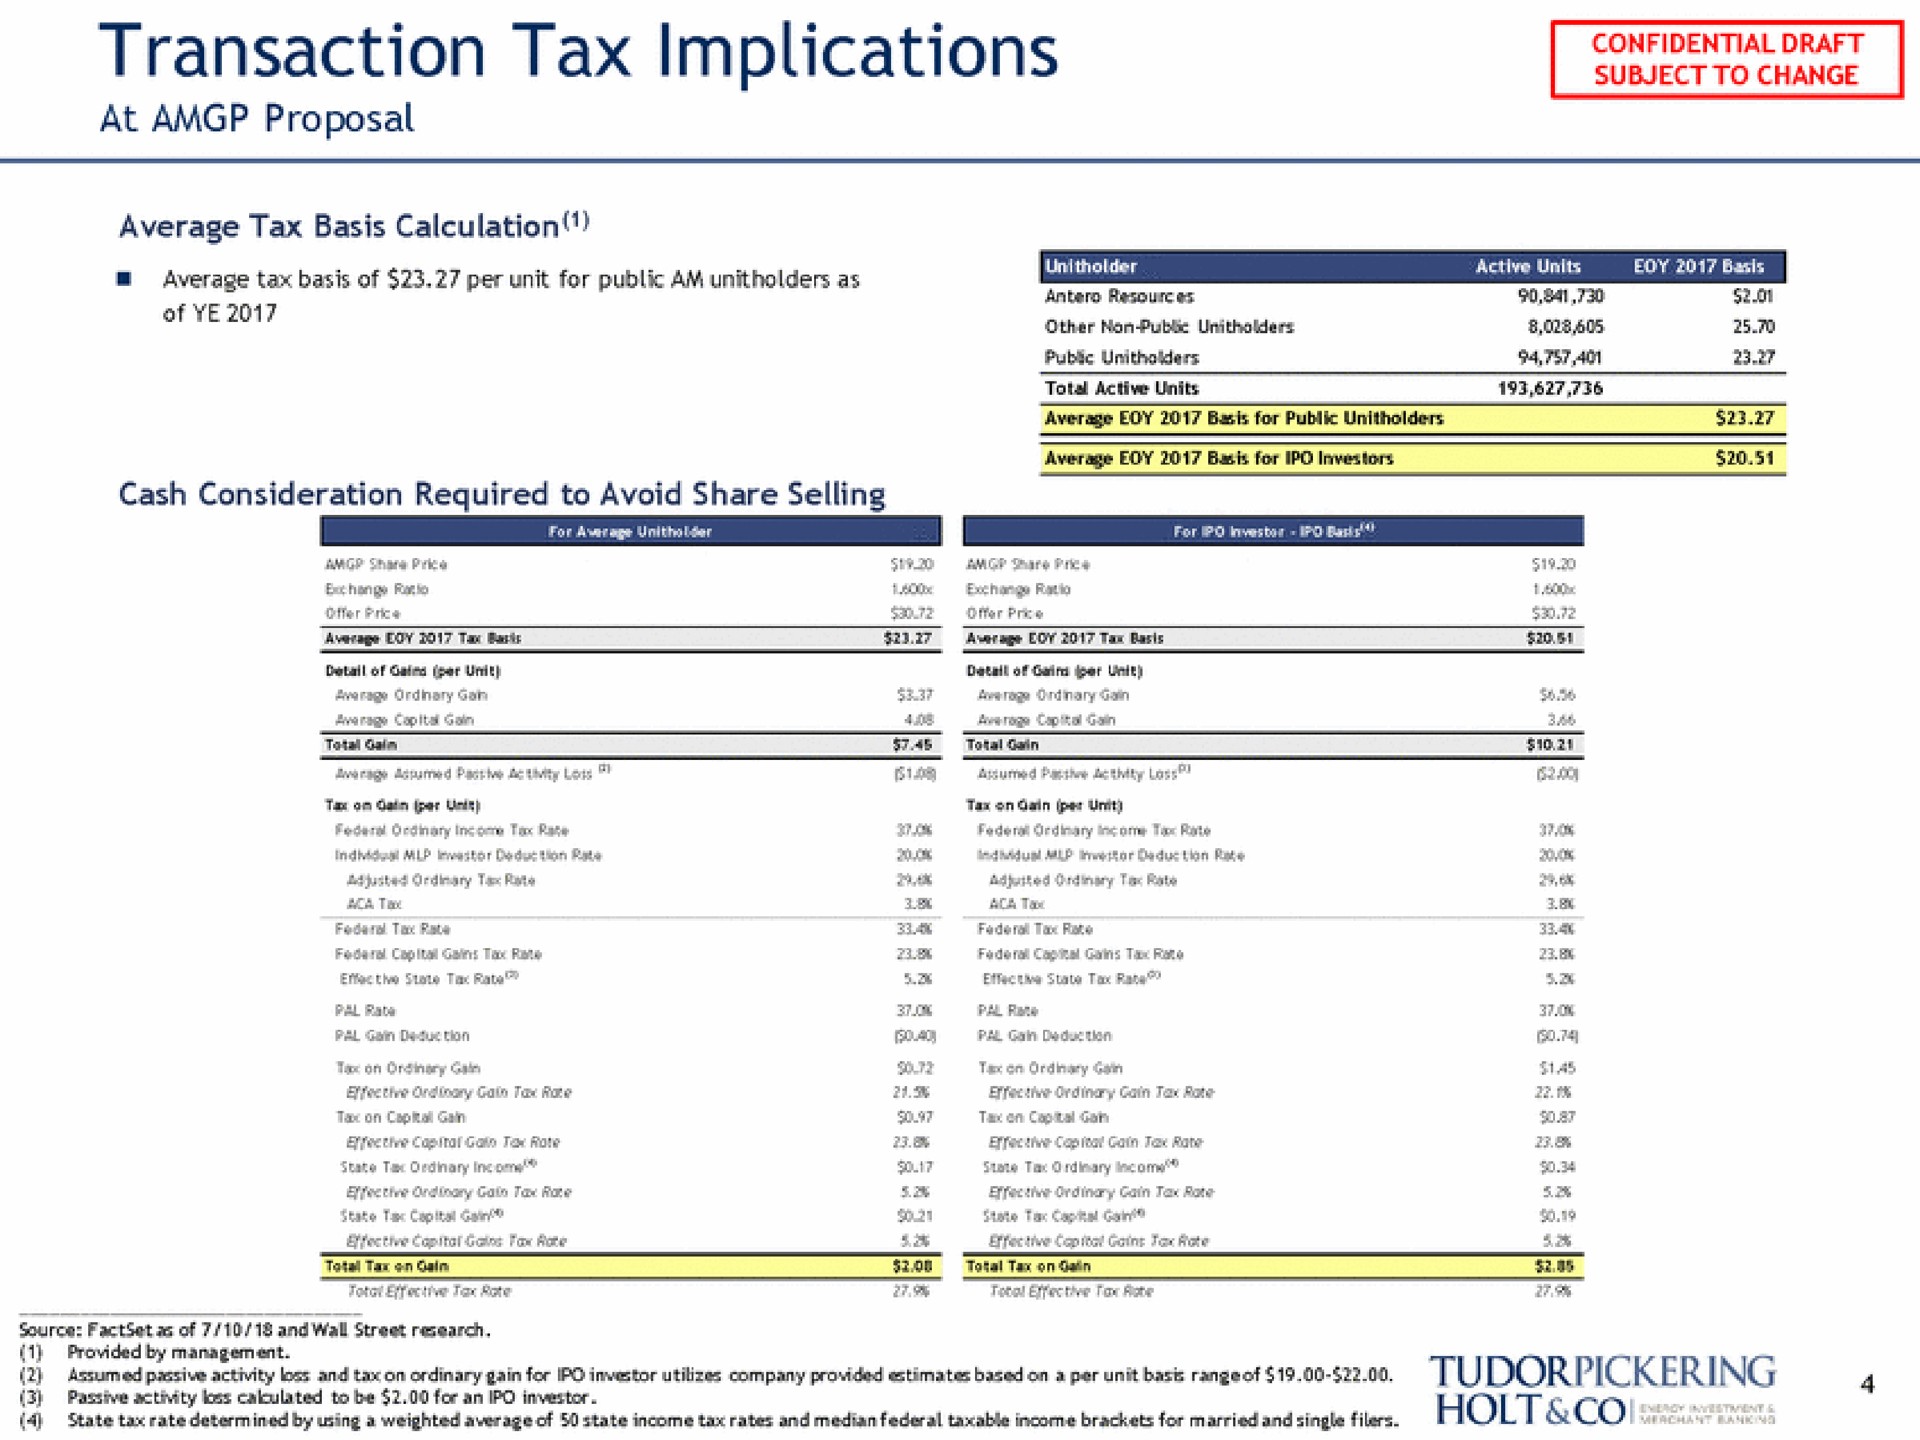 transaction tax implications holt lee | Tudor, Pickering, Holt & Co